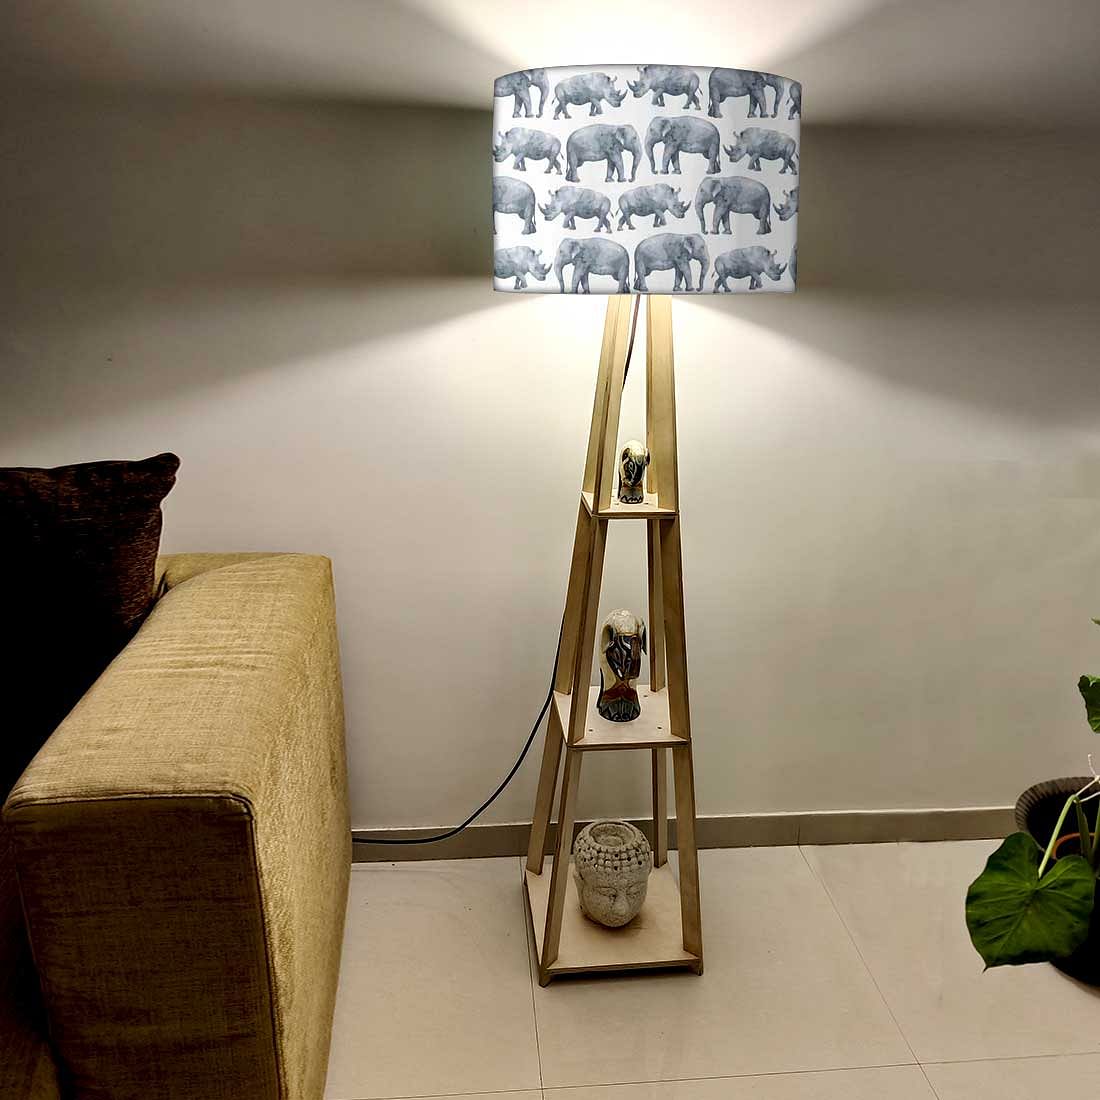 Wooden Shelf Tall Lamps for Living Room - Elephants Nutcase